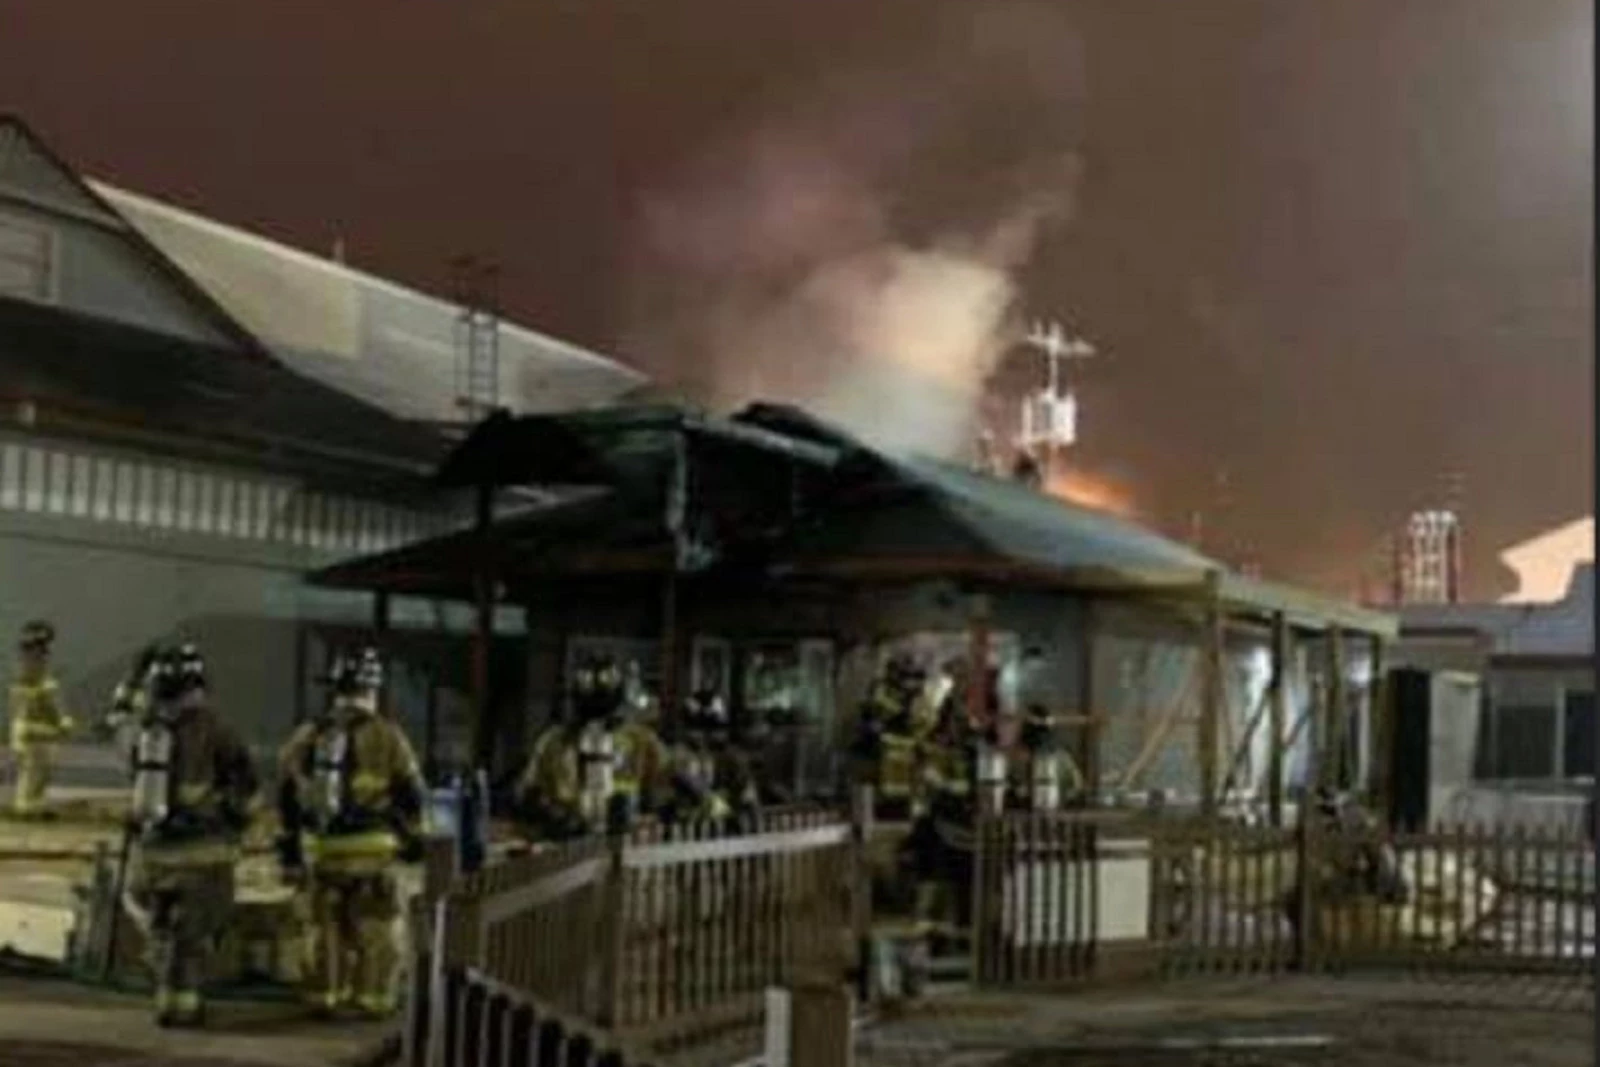 Fire destroys ice cream shop at Fantasy Island amusement park